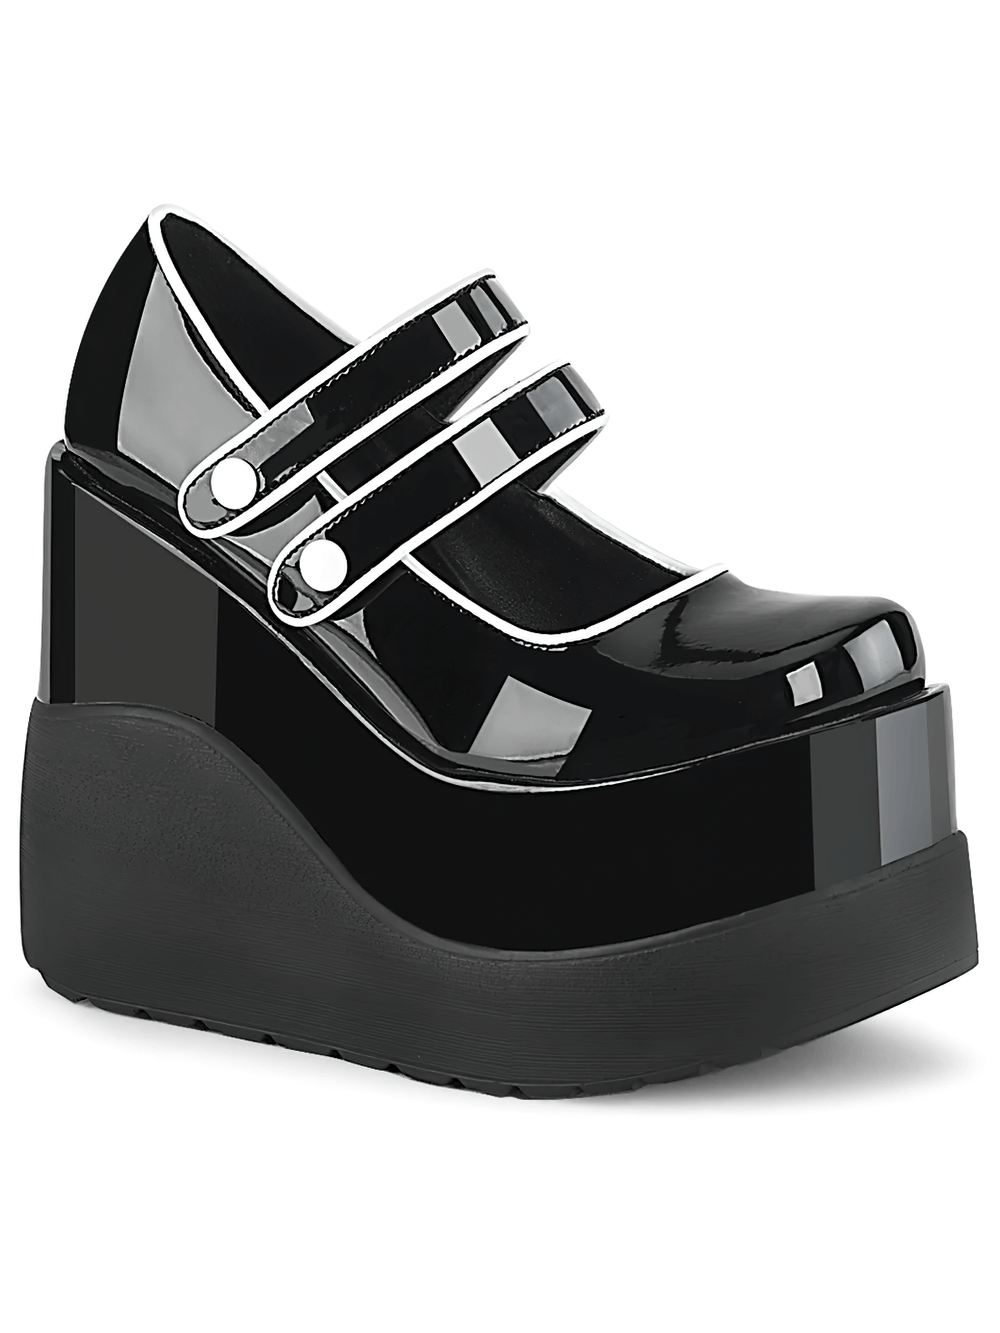 DEMONIA Black Patent Wedge Platform Mary Jane Shoes